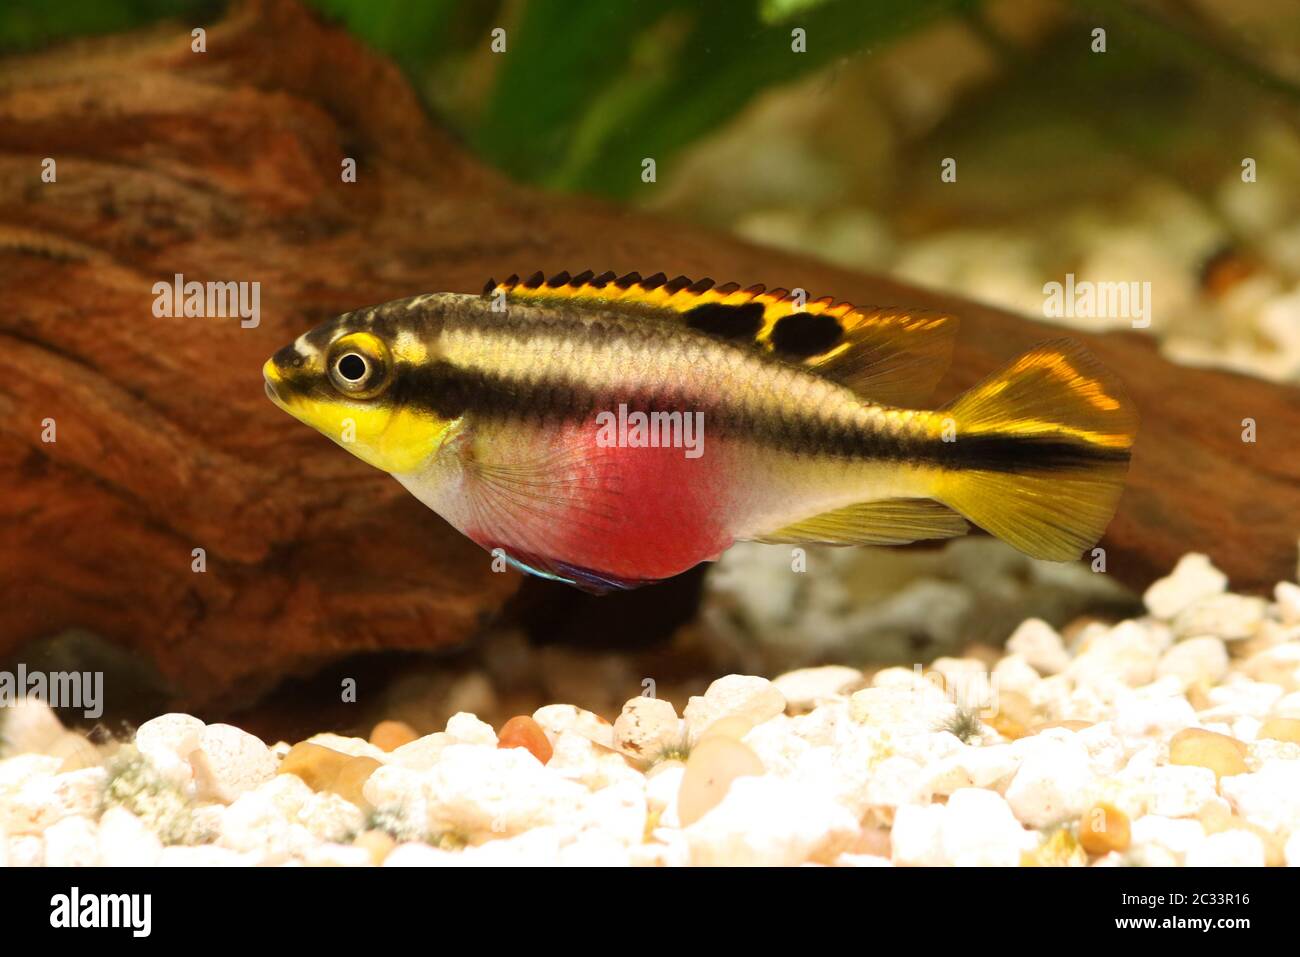 Female Pelvicachromis pulcher kribensis cichlid Aquarium fish isolated on white Stock Photo